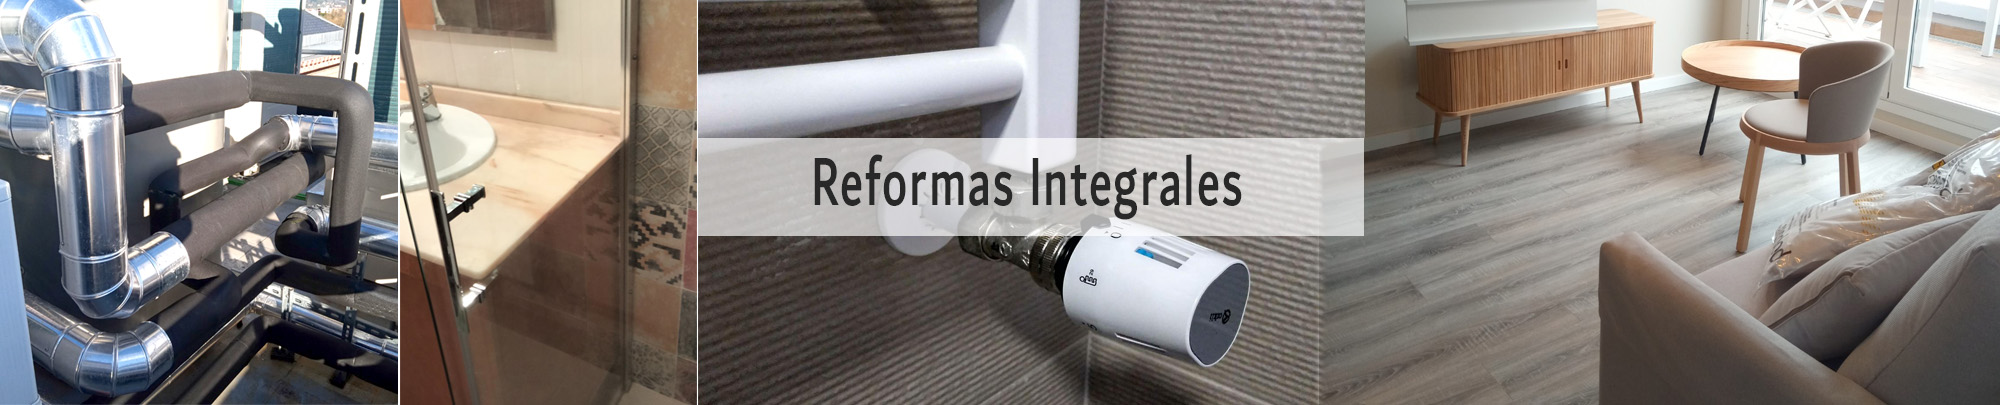 reformas integrales